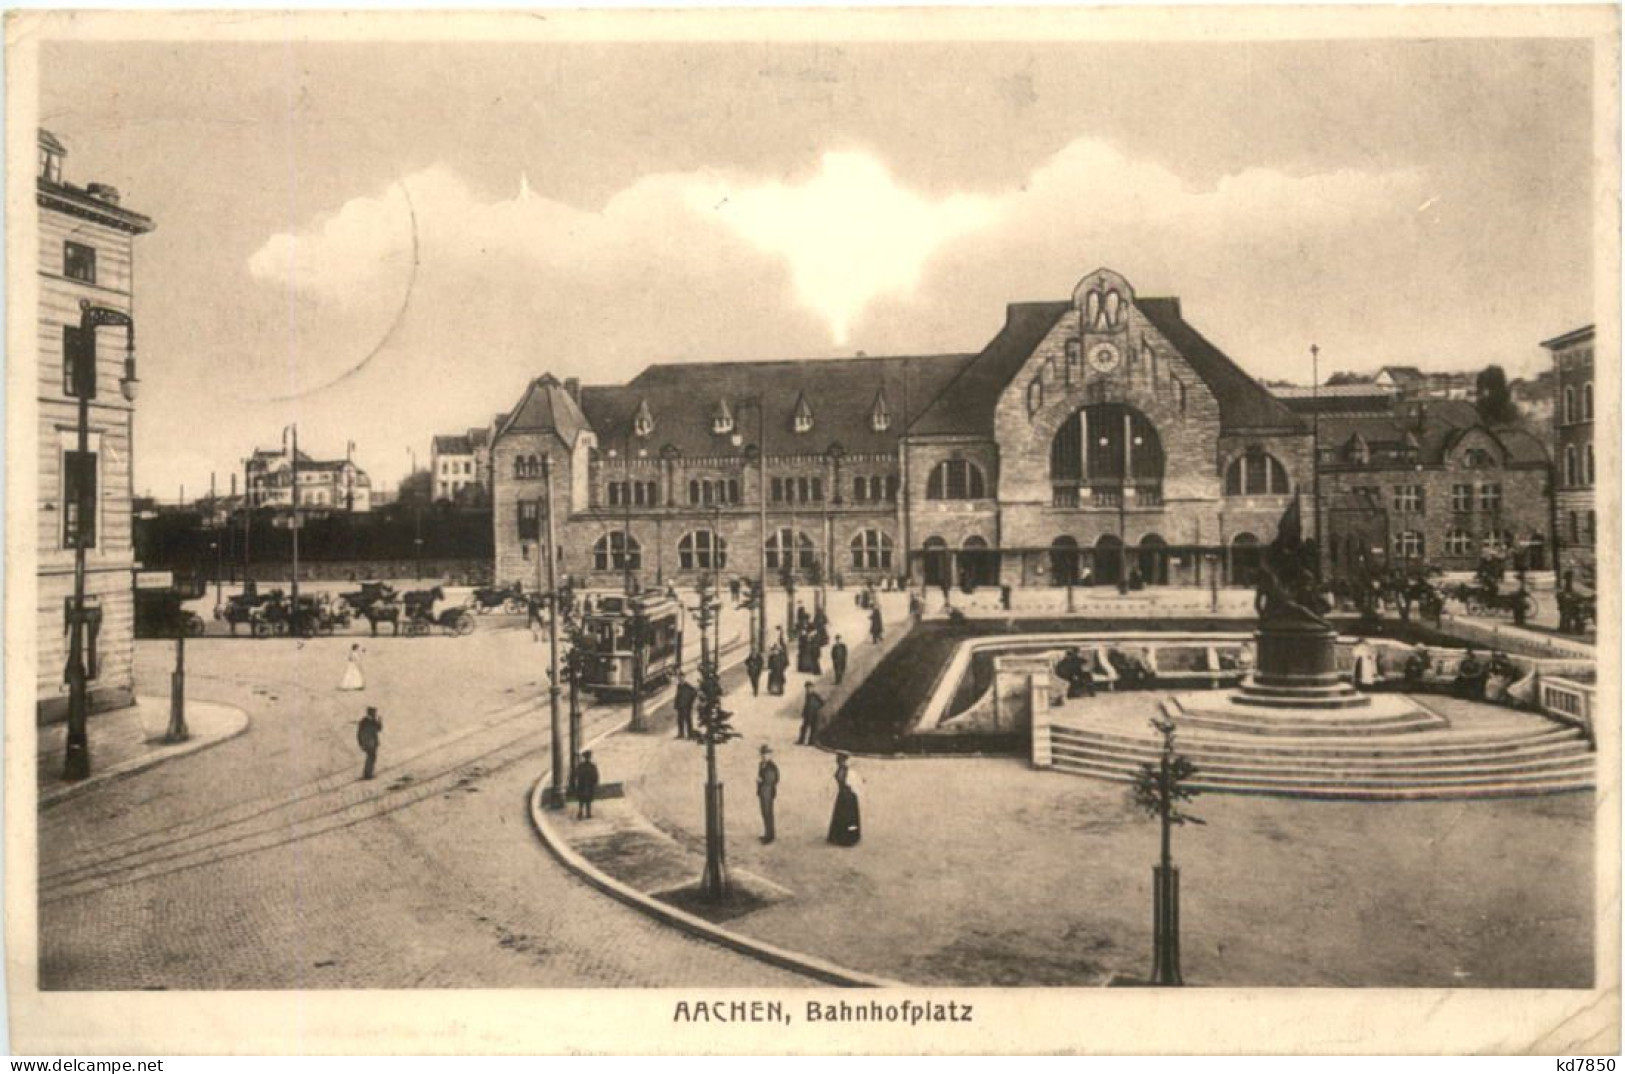 Aachen, Bahnhofsplatz - Aken